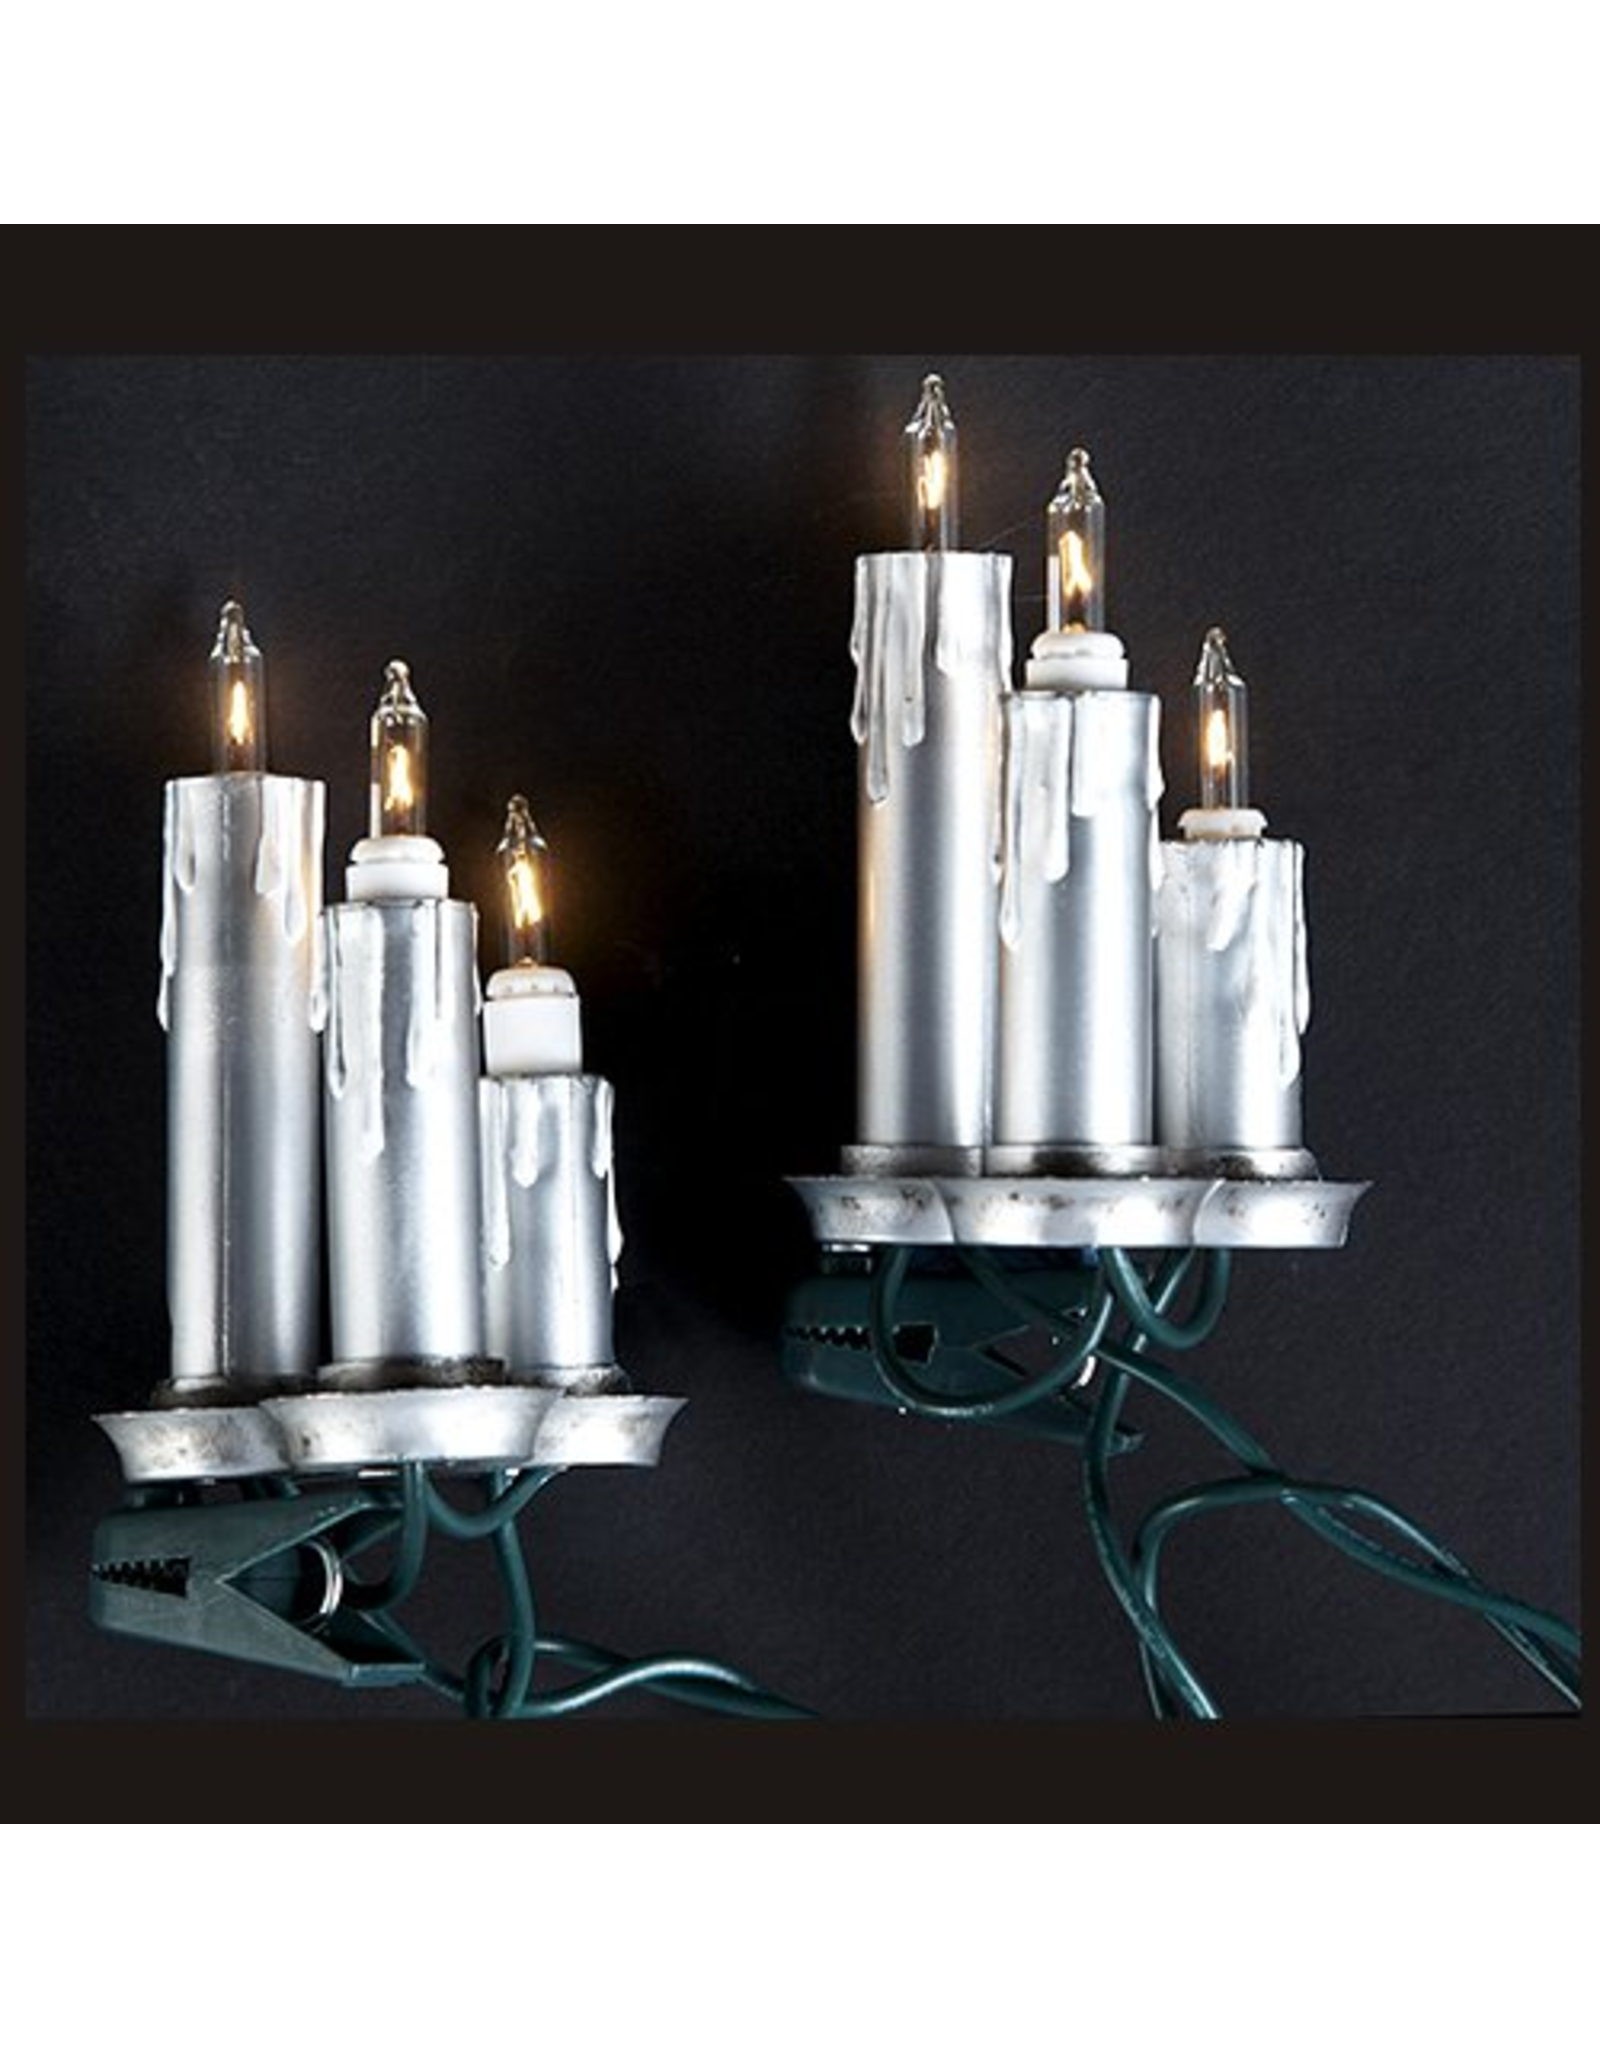 Kurt Adler Silver Triple Candle Light Set